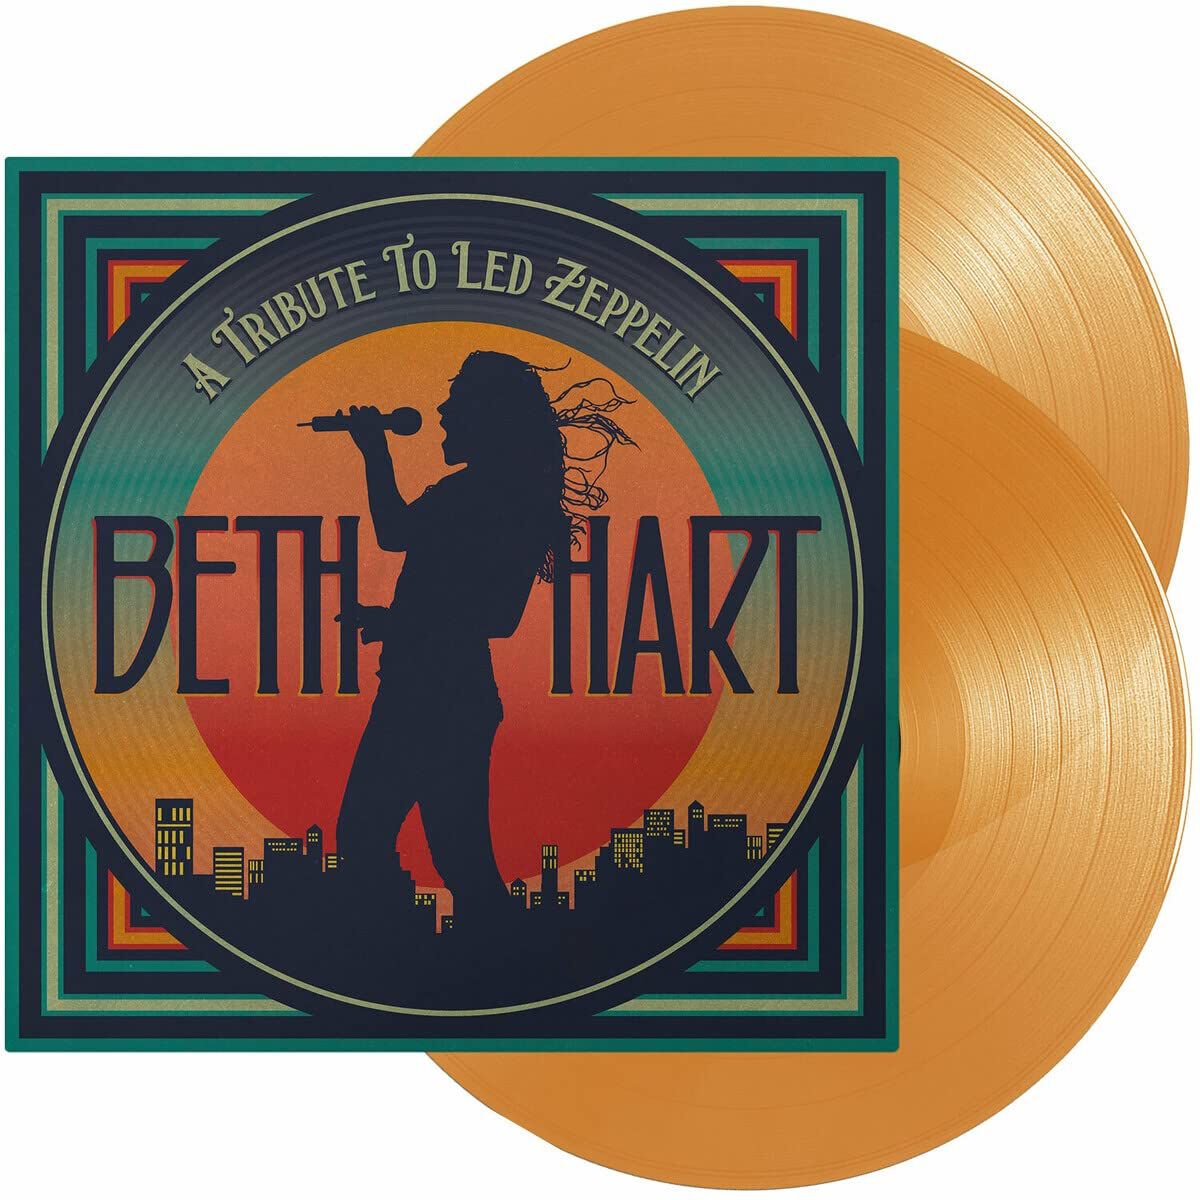 Beth Hart A tribute to Led Zeppelin LP orange